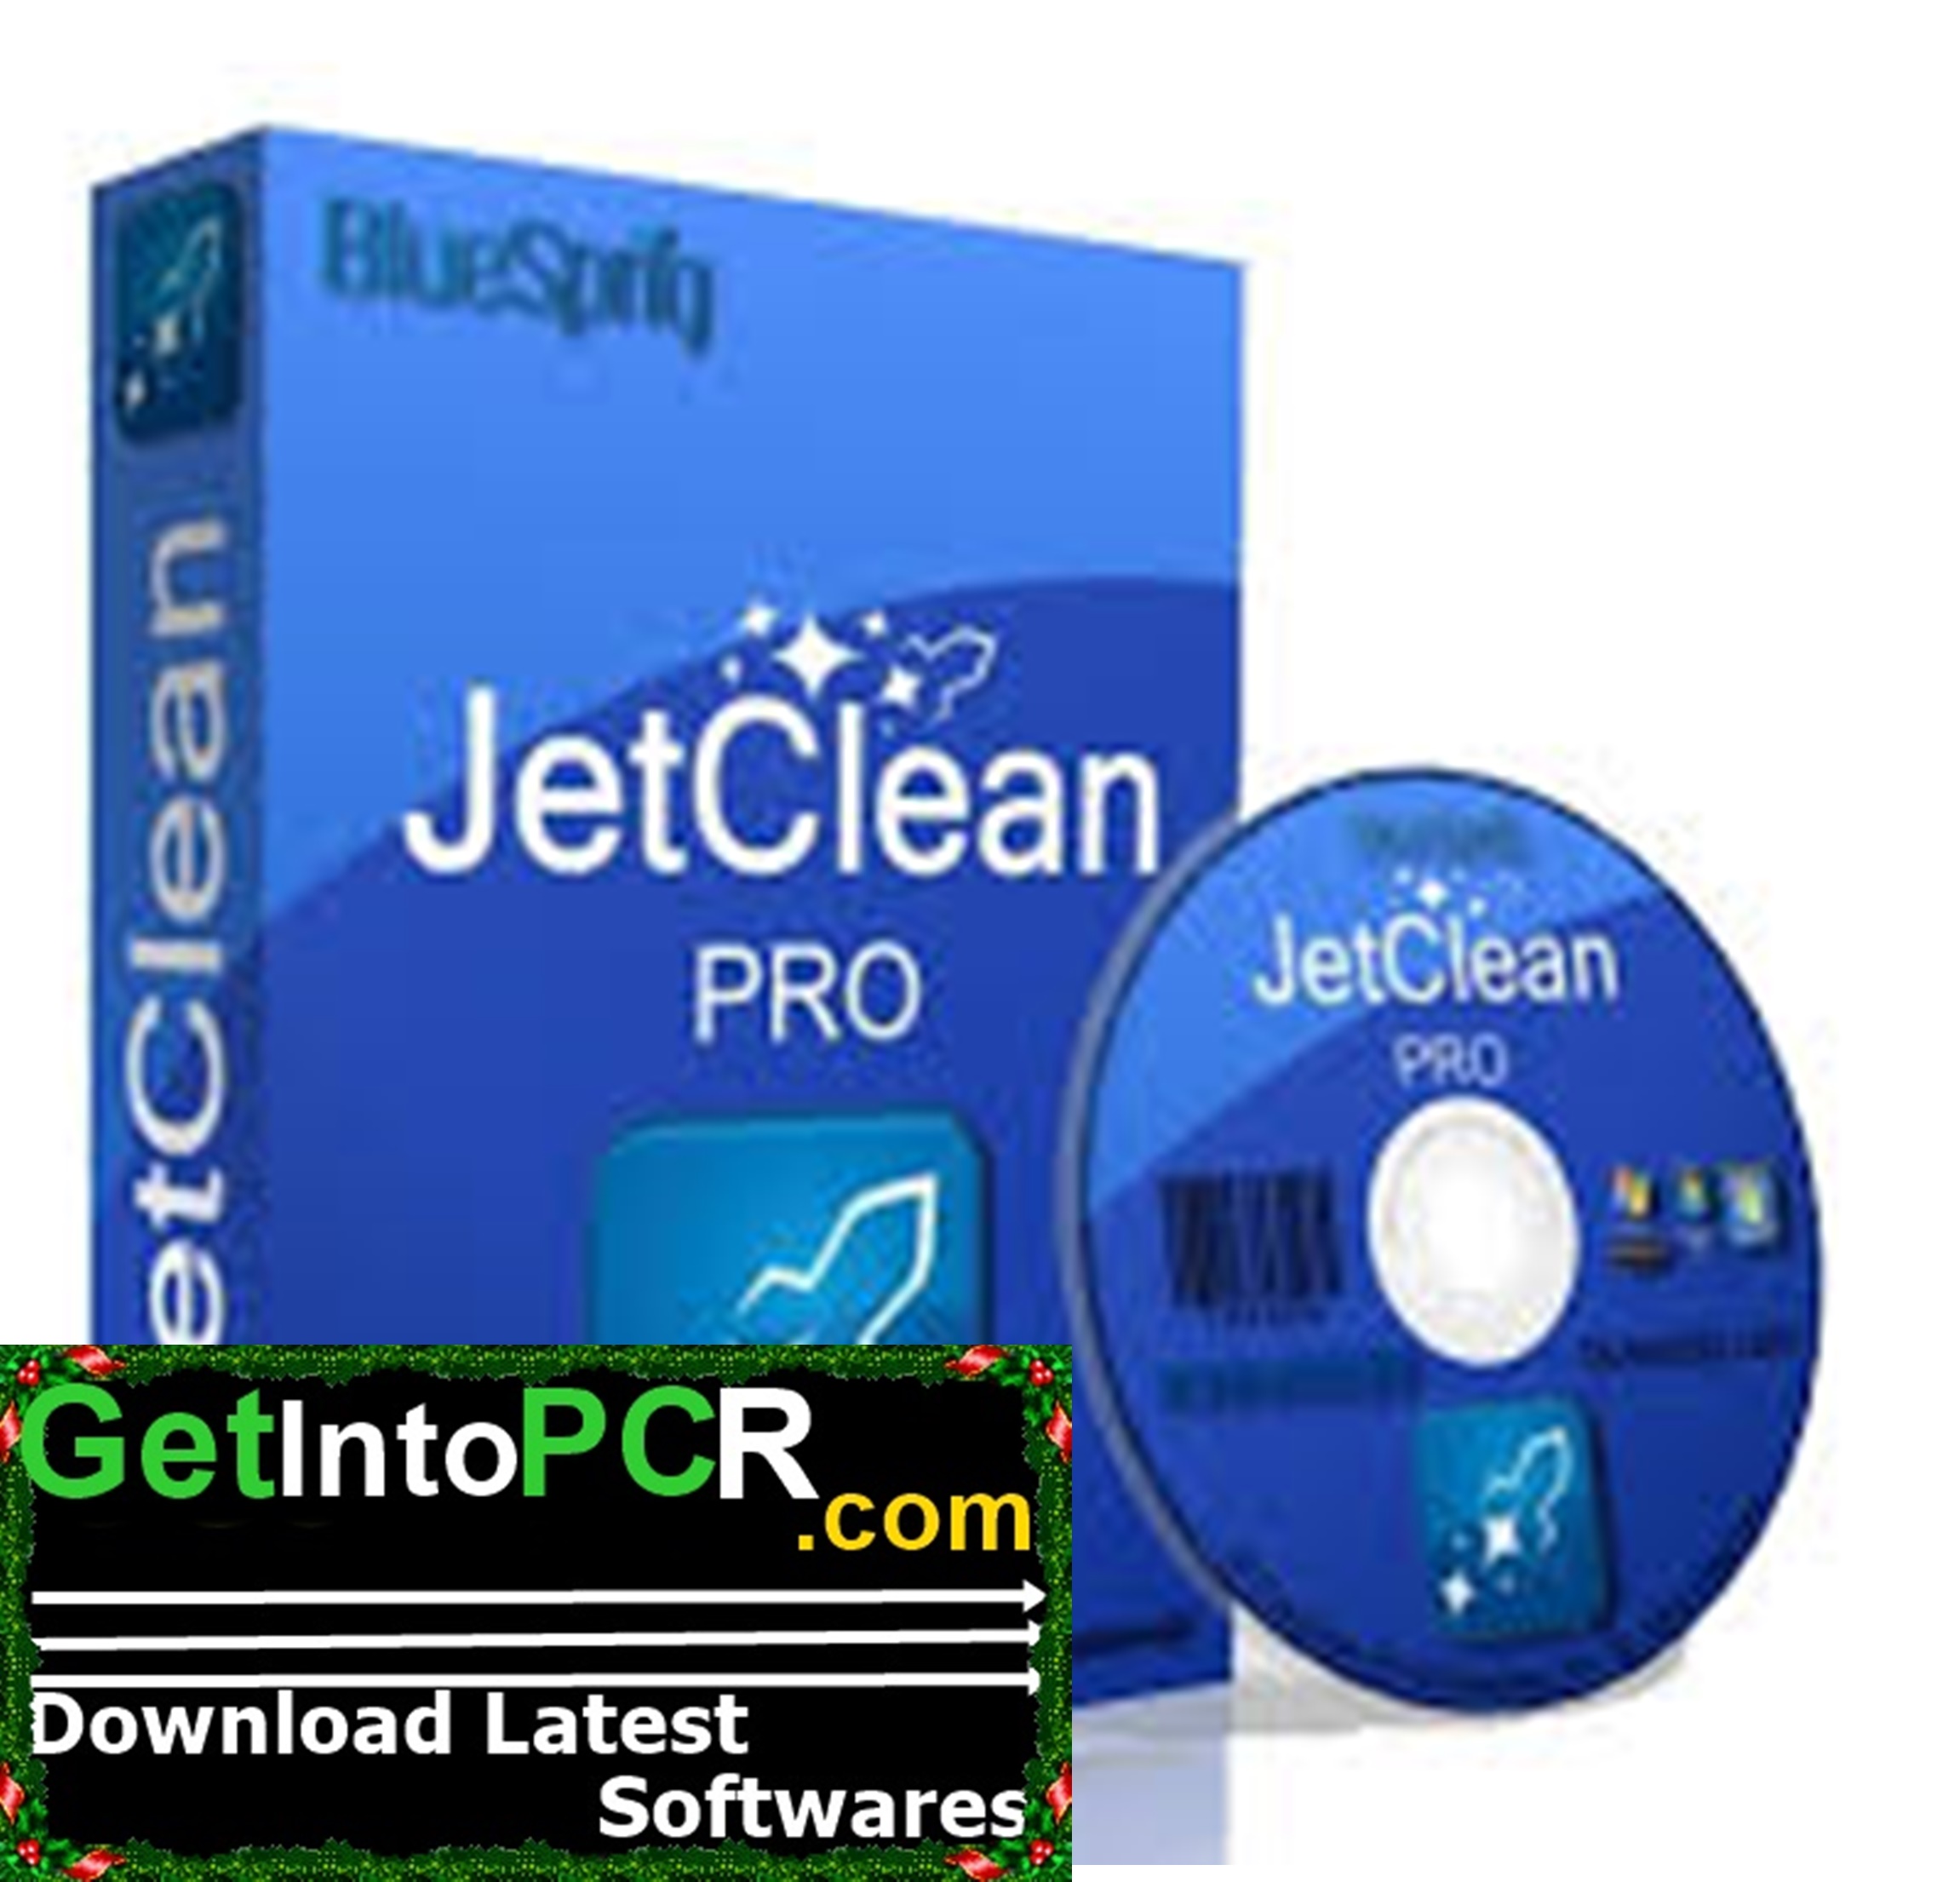 JetClean Pro 2019 free Download